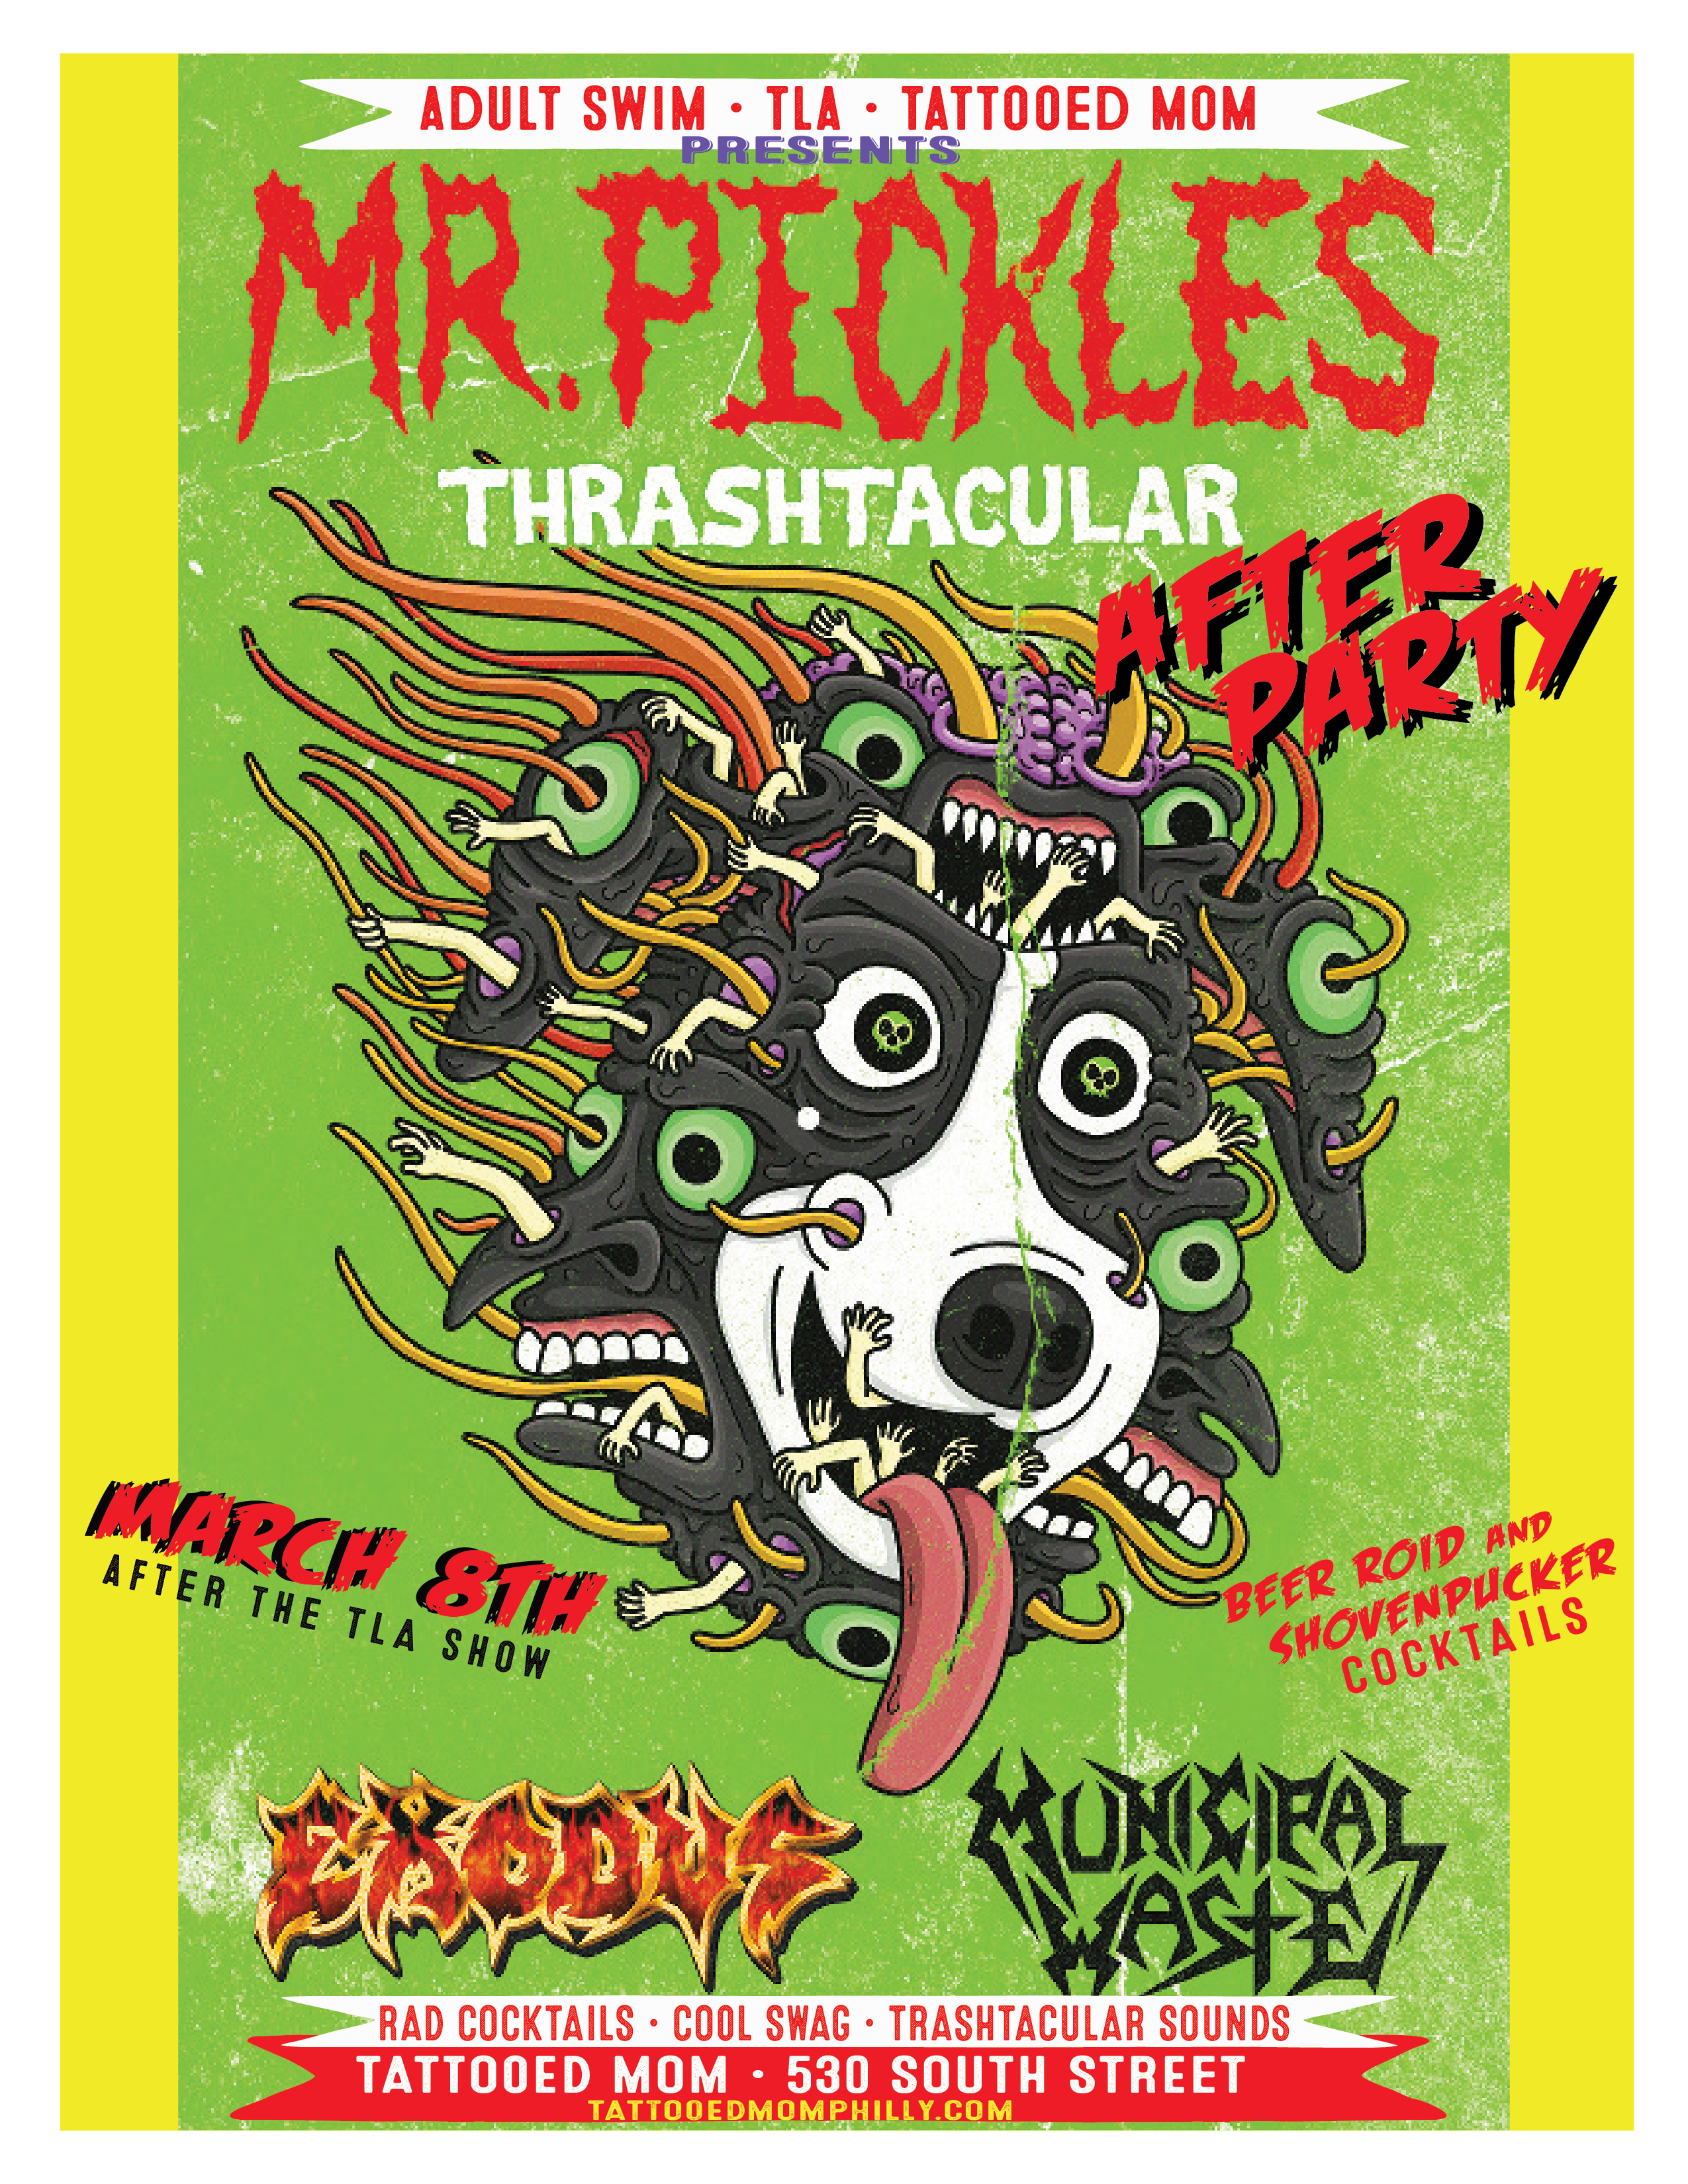 Mr. Pickles Thrash-tacular - Riot Fest